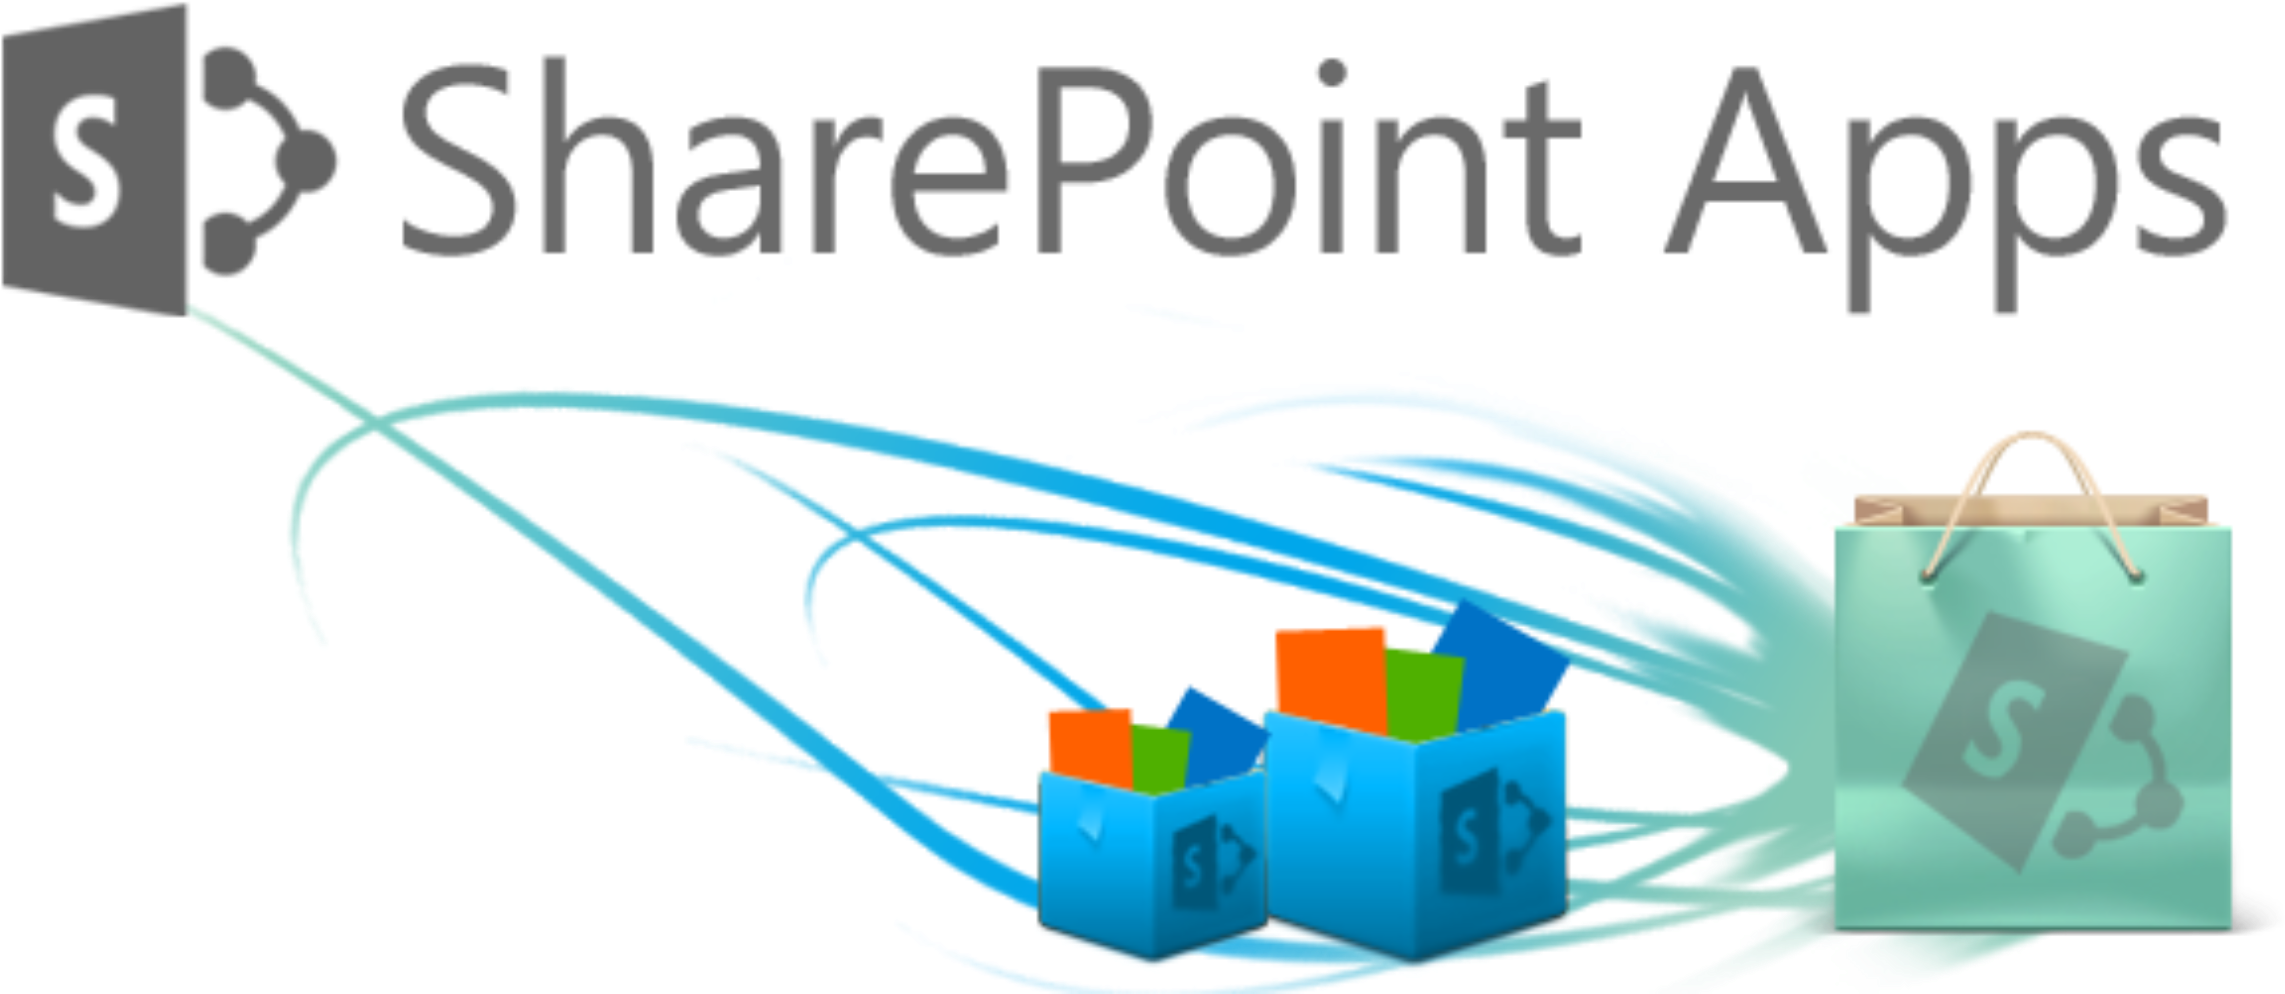 Beyond Intranet Sharepoint Services Sharepoint Online,beyondintranetcom - Microsoft Sharepoint (2340x1070)